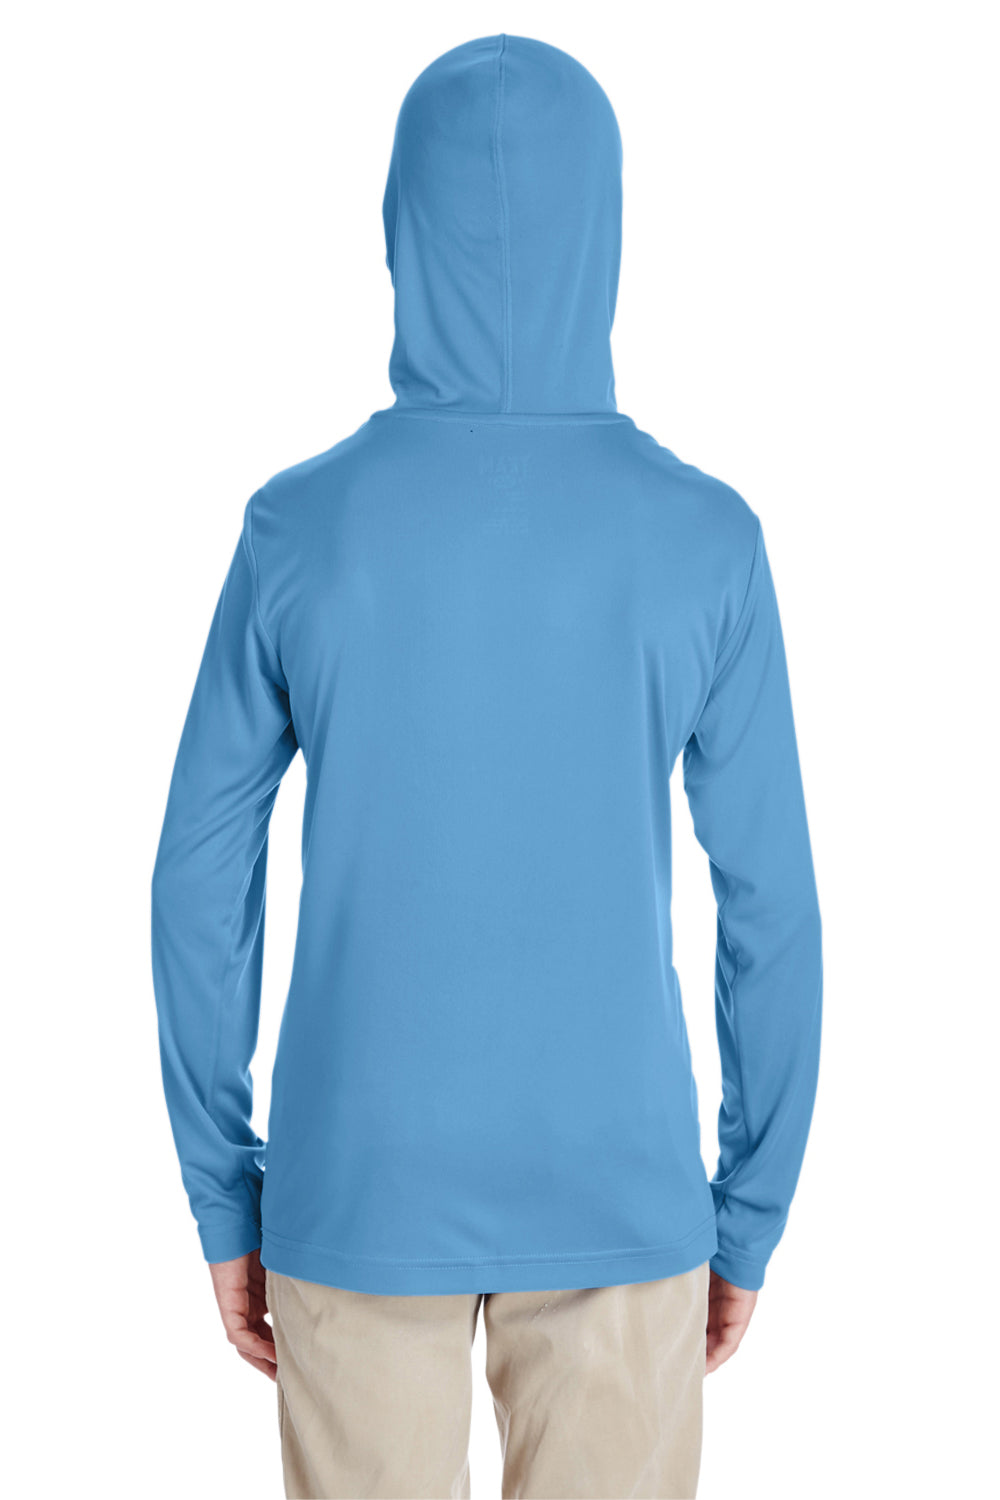 Team 365 TT41Y Youth Zone Performance Moisture Wicking Long Sleeve Hooded T-Shirt Hoodie Light Blue Back